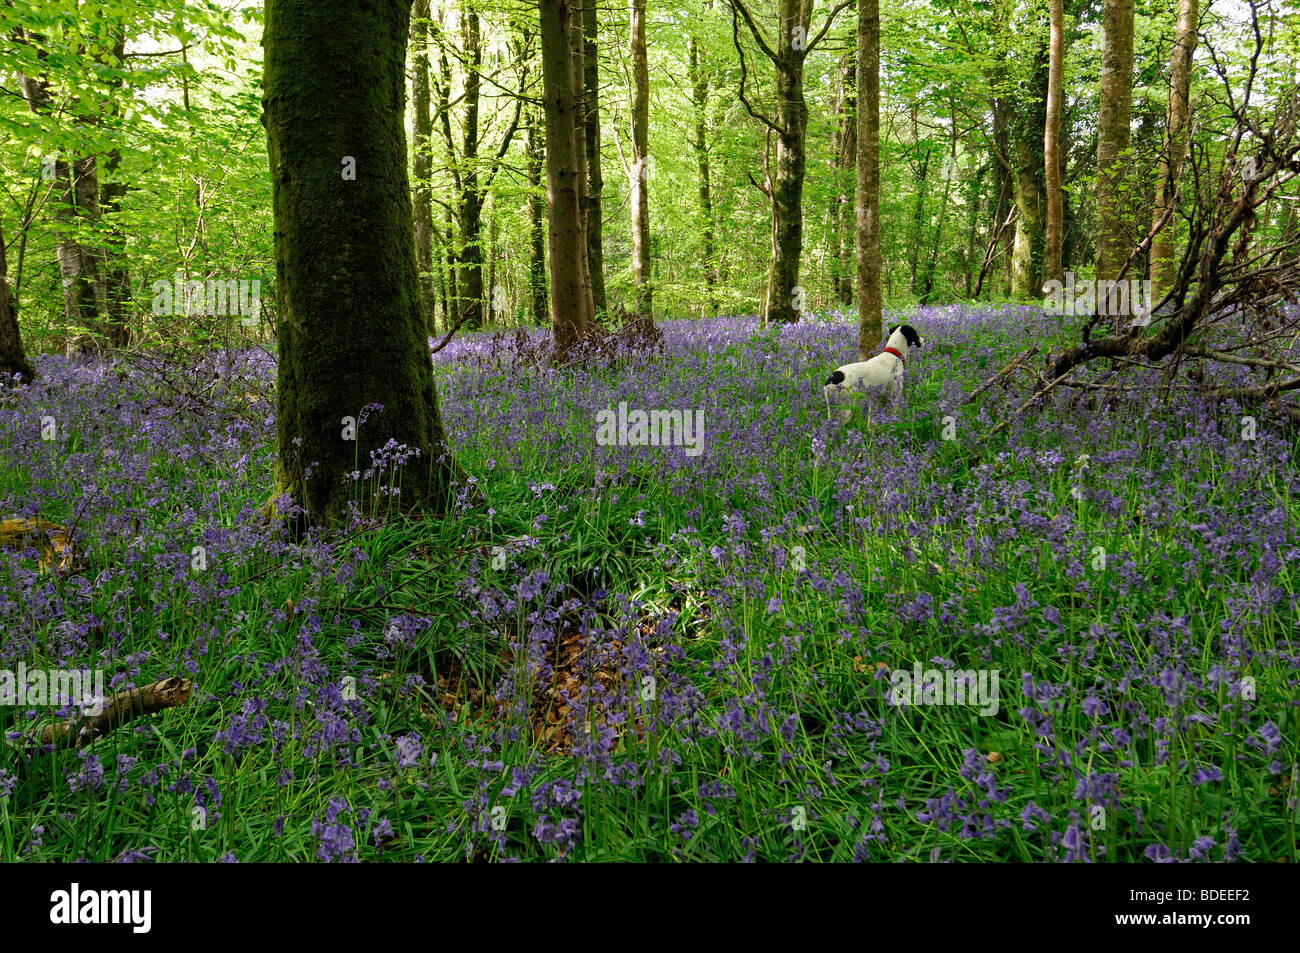 White hunter dog Carpet of bluebells in Jenkinstown Wood County Kilkenny Ireland Stock Photo